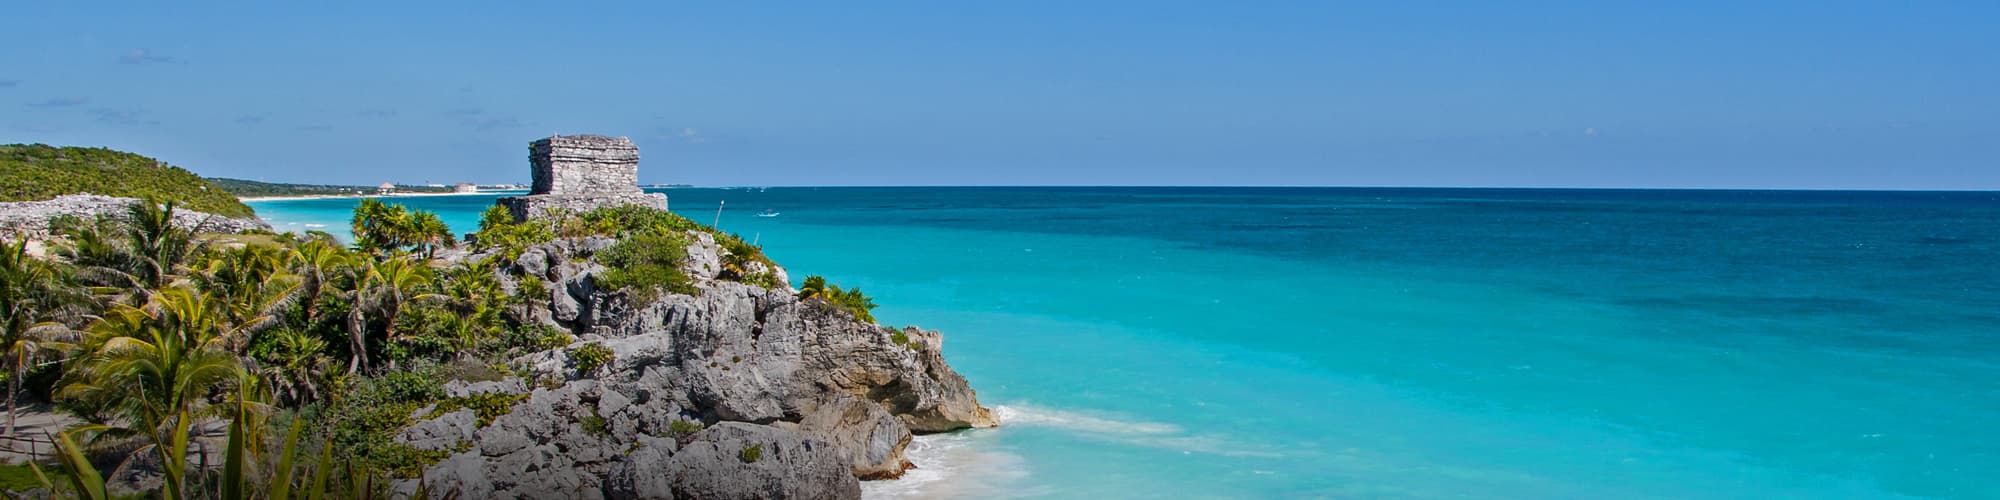 Voyage en groupe Yucatan et Caraïbes © markross / Istock